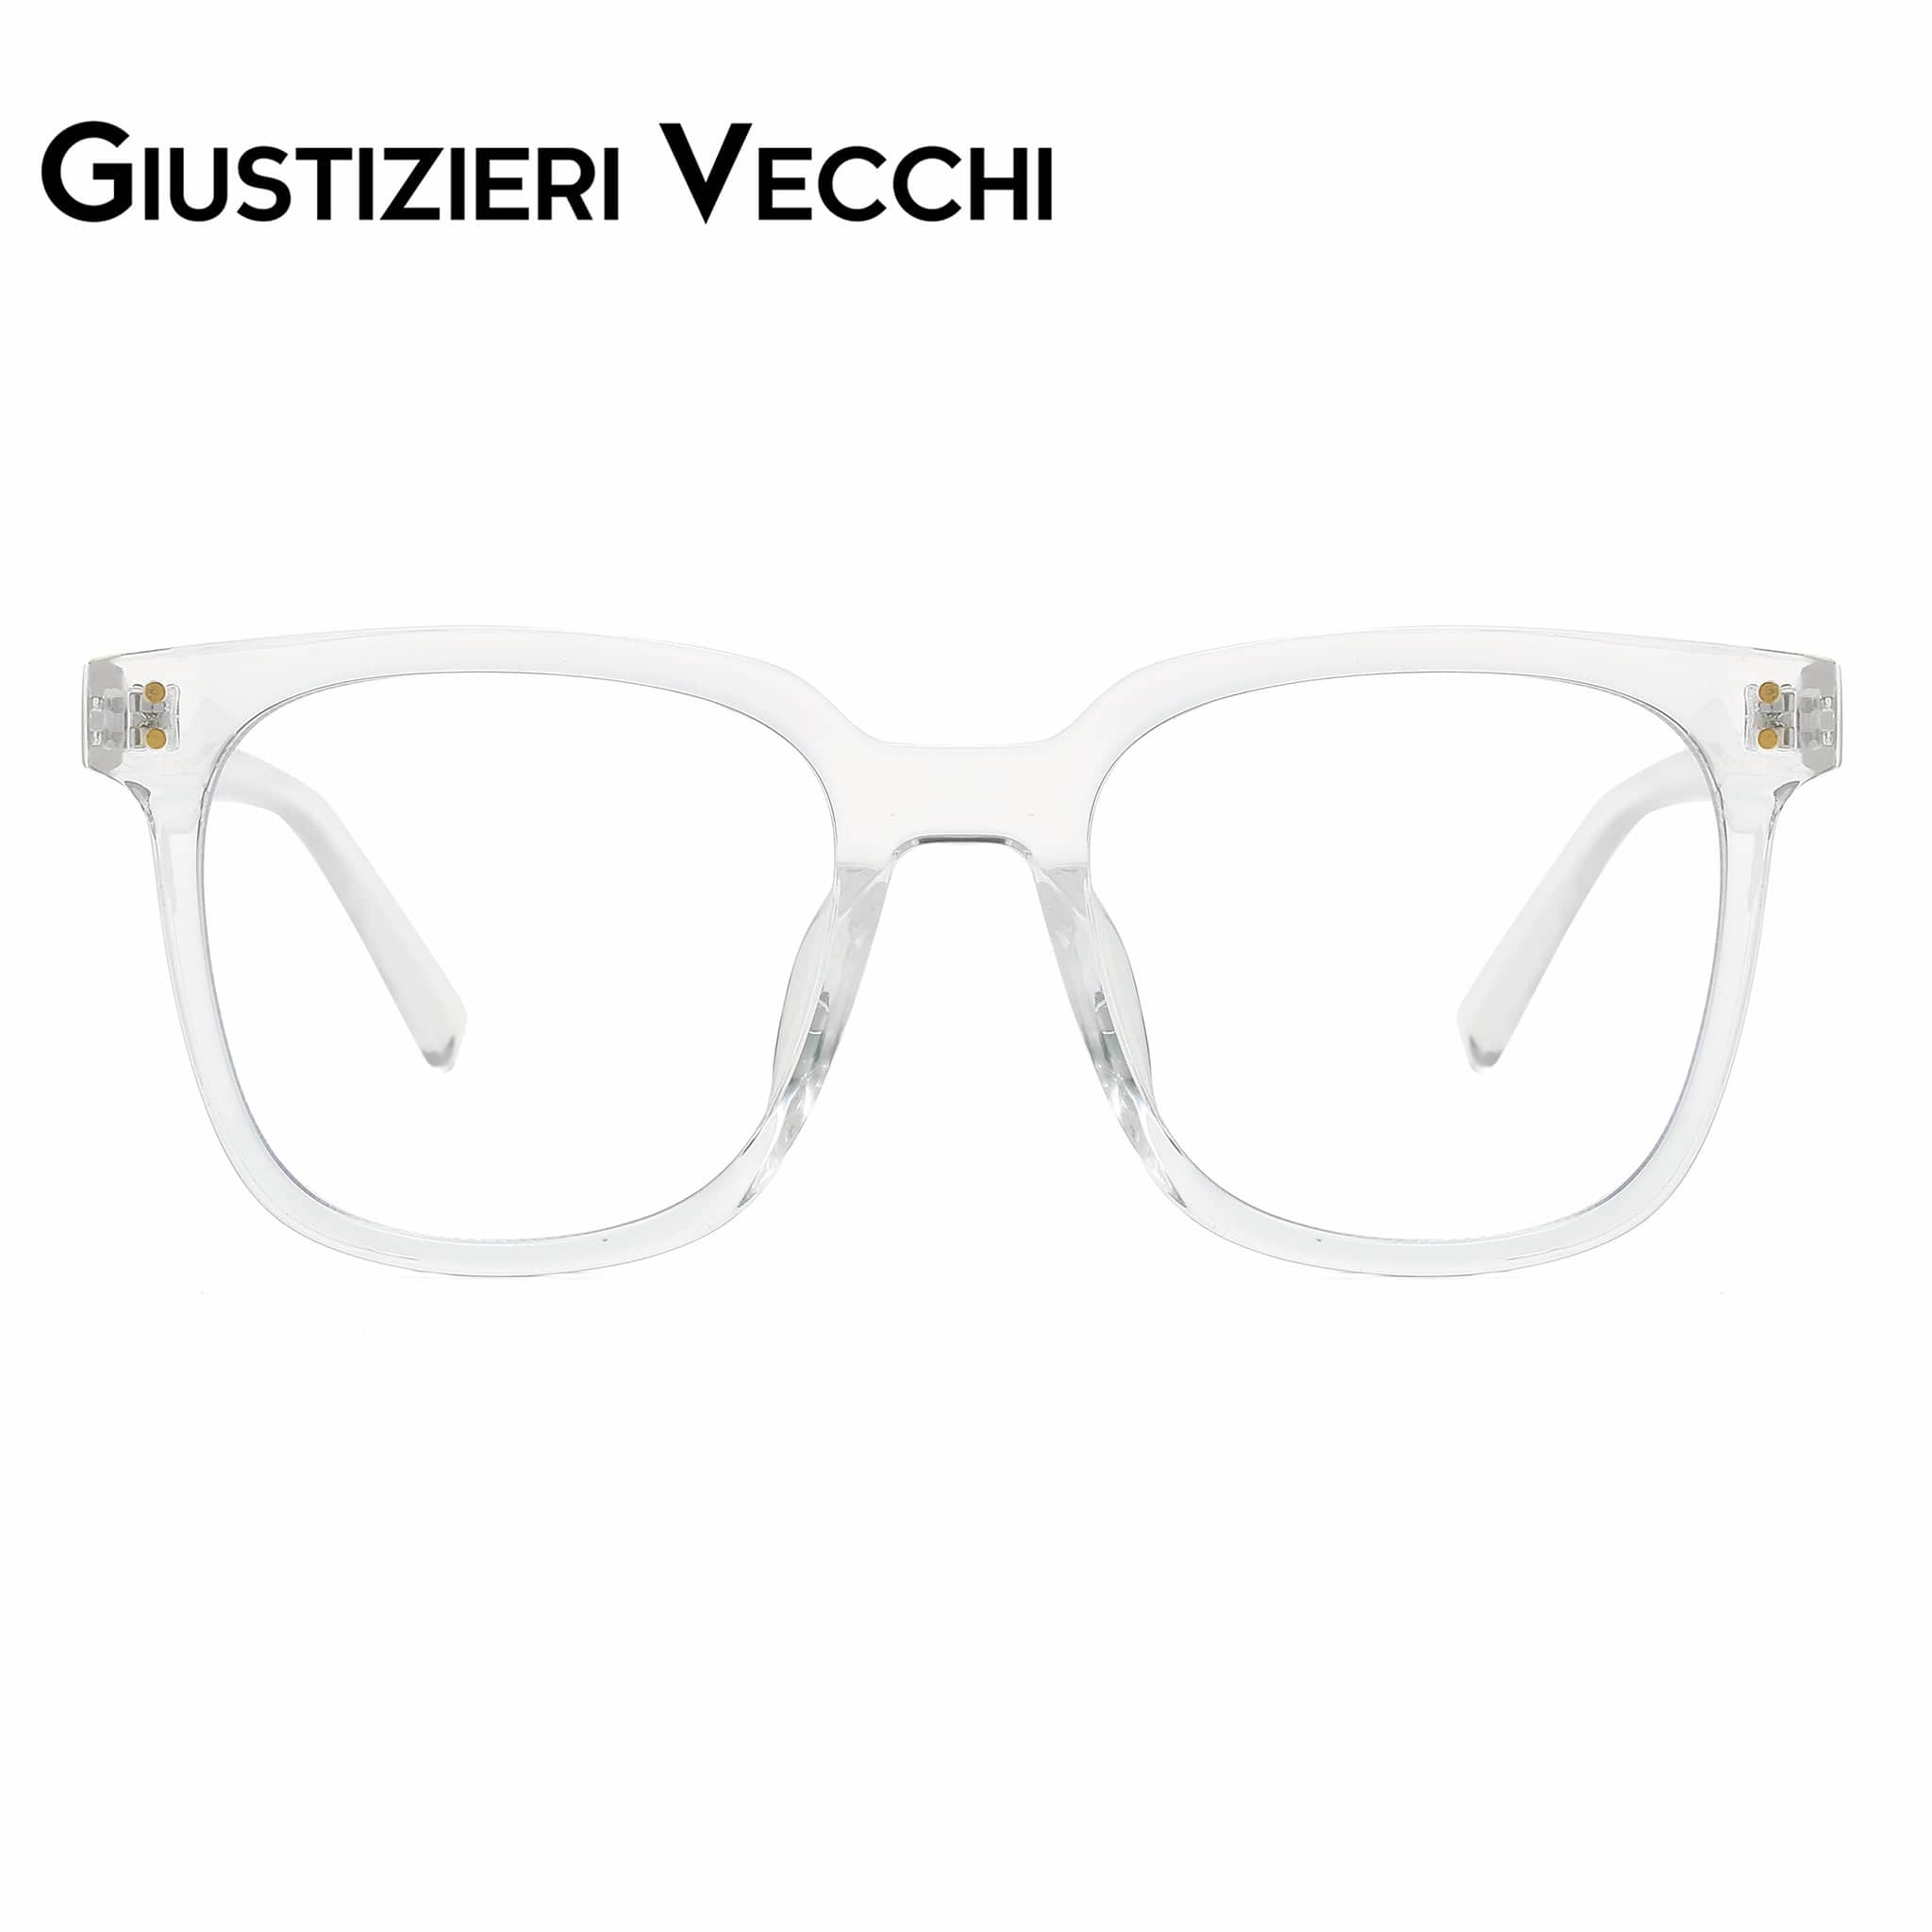 GIUSTIZIERI VECCHI Eyeglasses Medium / Clear Crystal Gioia Tre